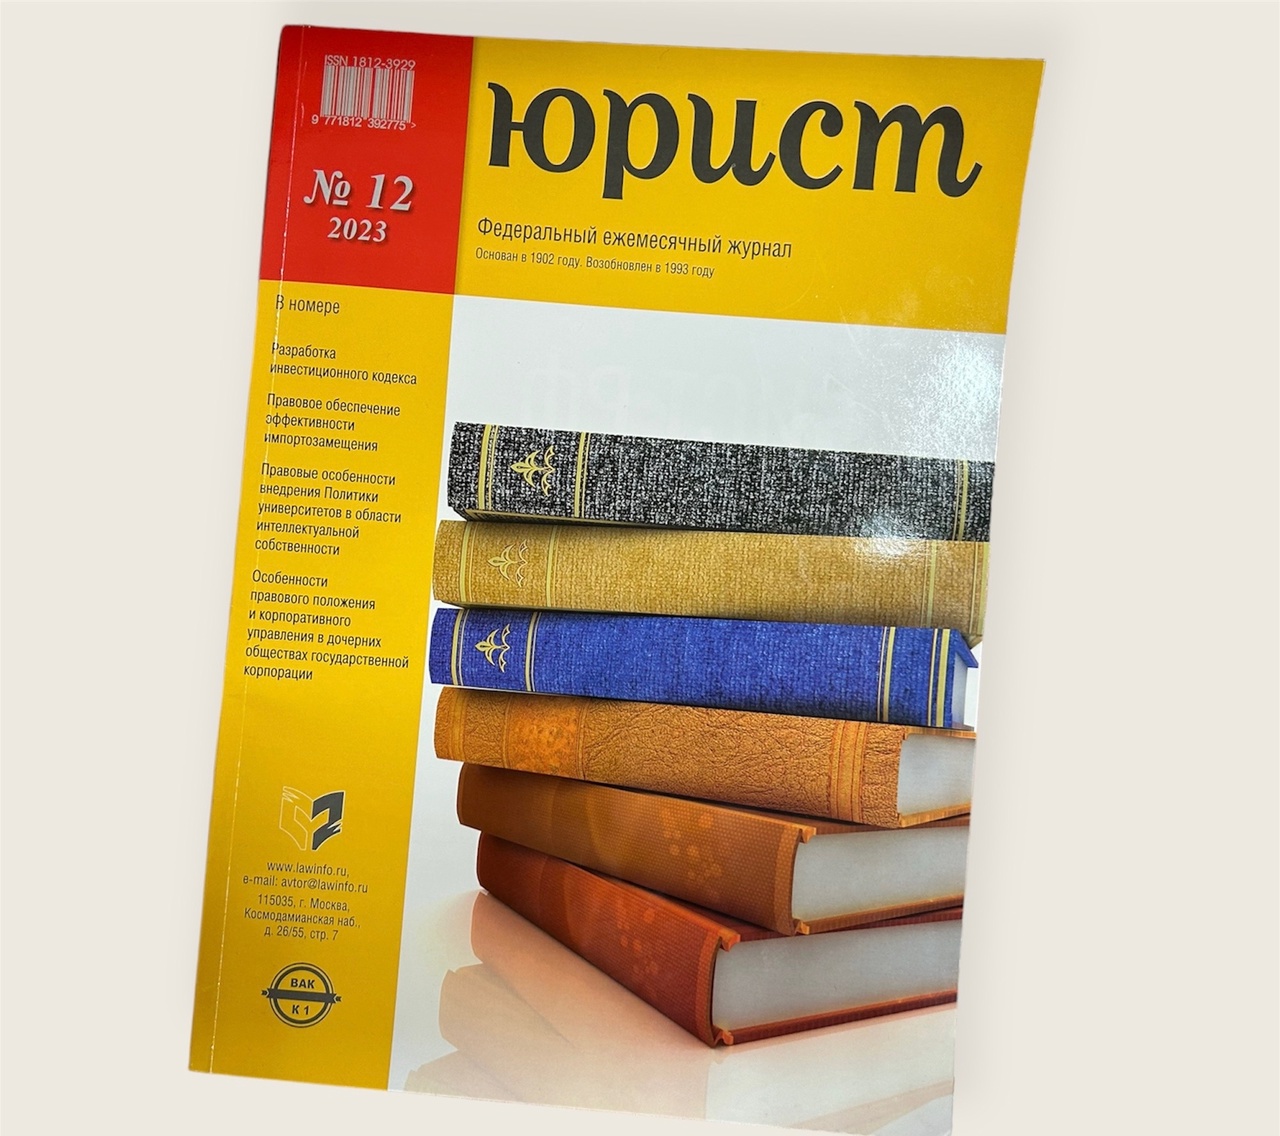 12-й номер журнала «Юрист» в библиотеке КФ РГУП